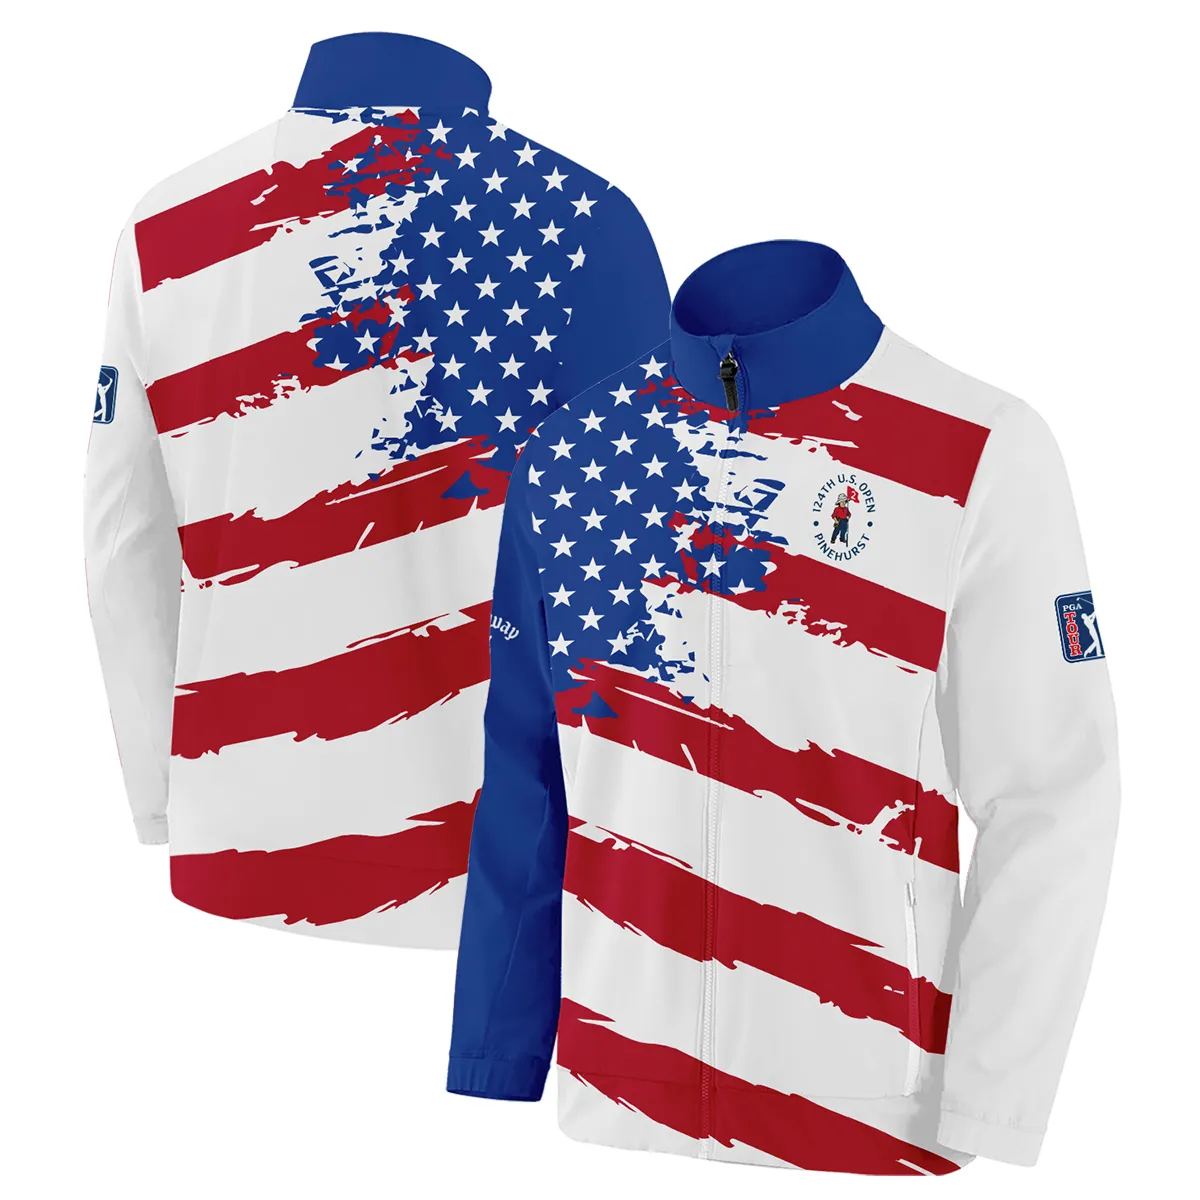 Sports Callaway 124th U.S. Open Pinehurst Sleeveless Jacket USA Flag Grunge White All Over Print Sleeveless Jacket